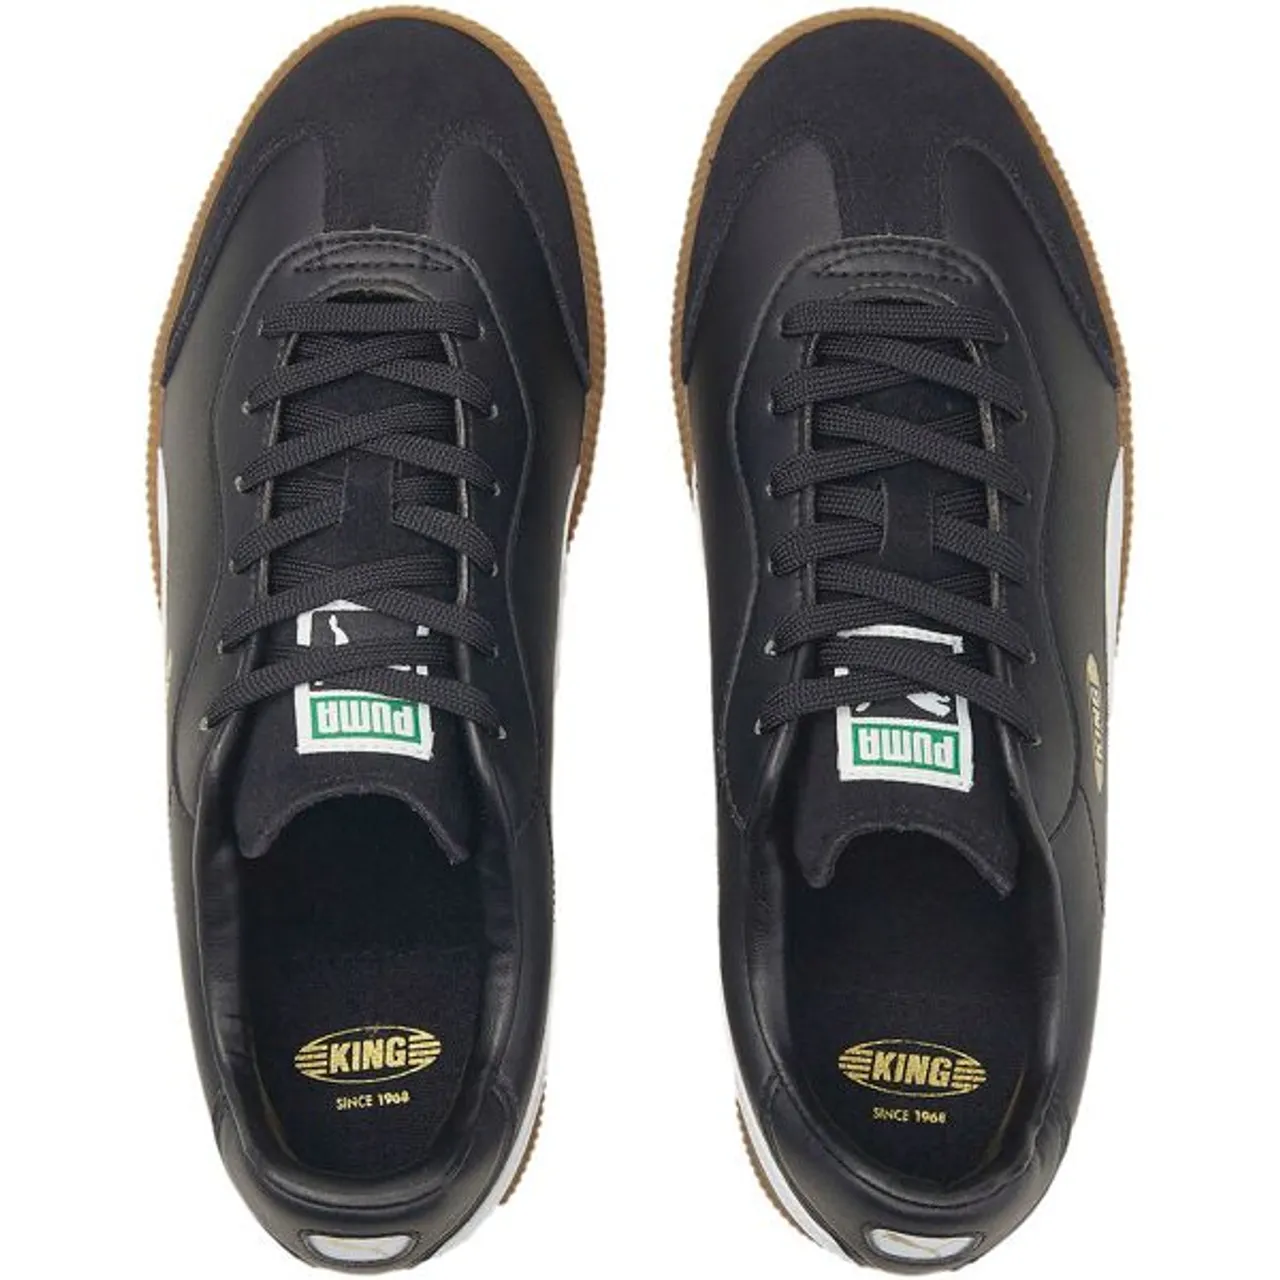 Sneaker PUMA "KING 21 IT" Gr. 42, schwarz-weiß (puma black, puma white, gum) Schuhe Fußballschuhe